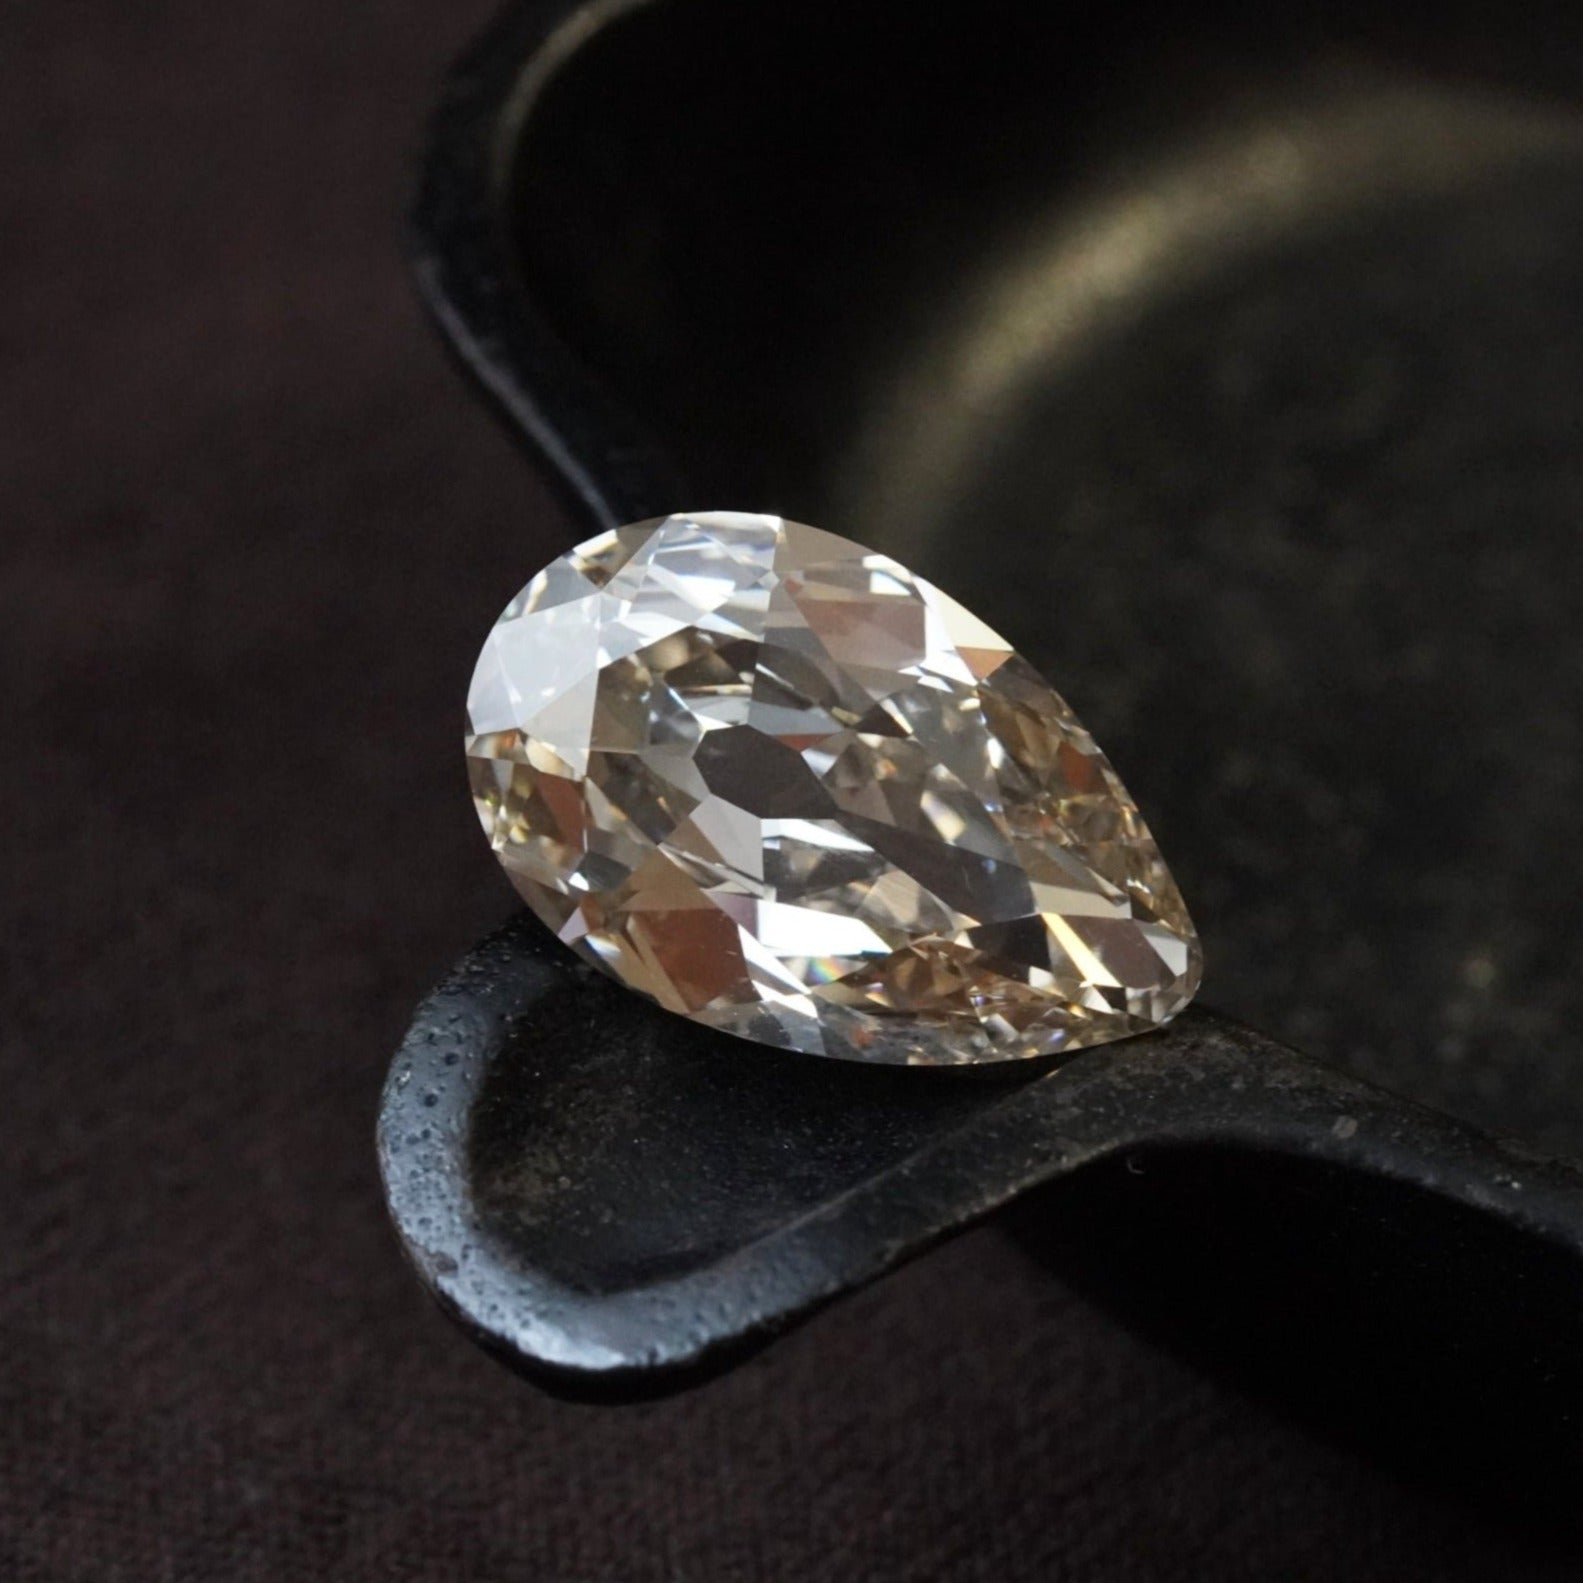 16.61-Carat Pear-Shaped Light-Brown Diamond